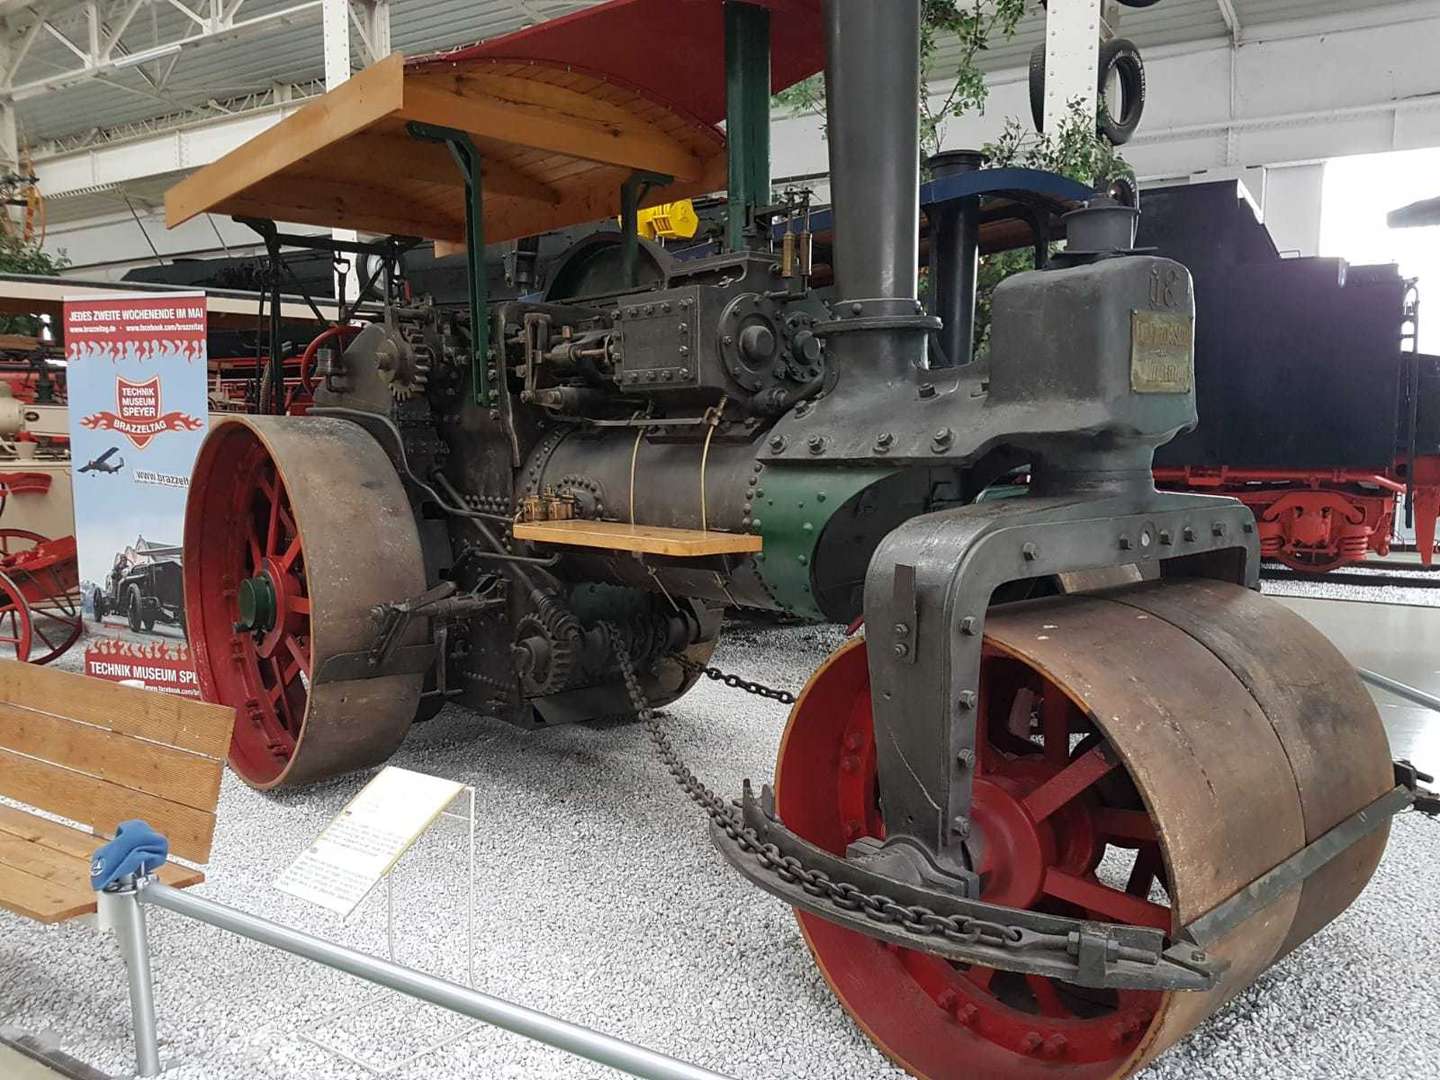 3 Tage Auszeit in der Pfalz inkl. Technikmuseum Speyer